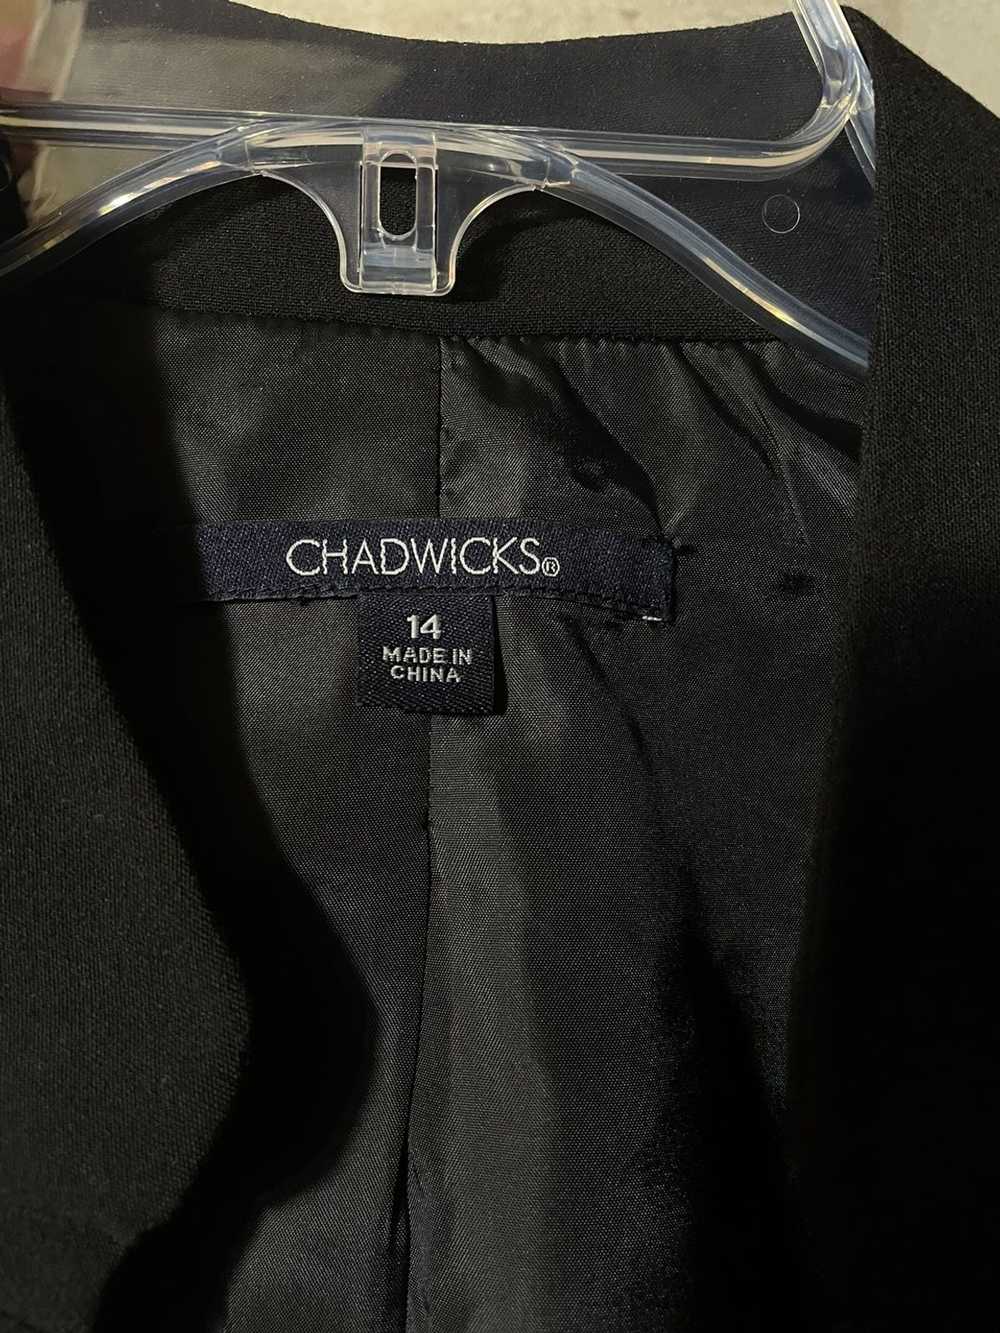 Custom Jacket Chadwicks black women’s jacket - image 3